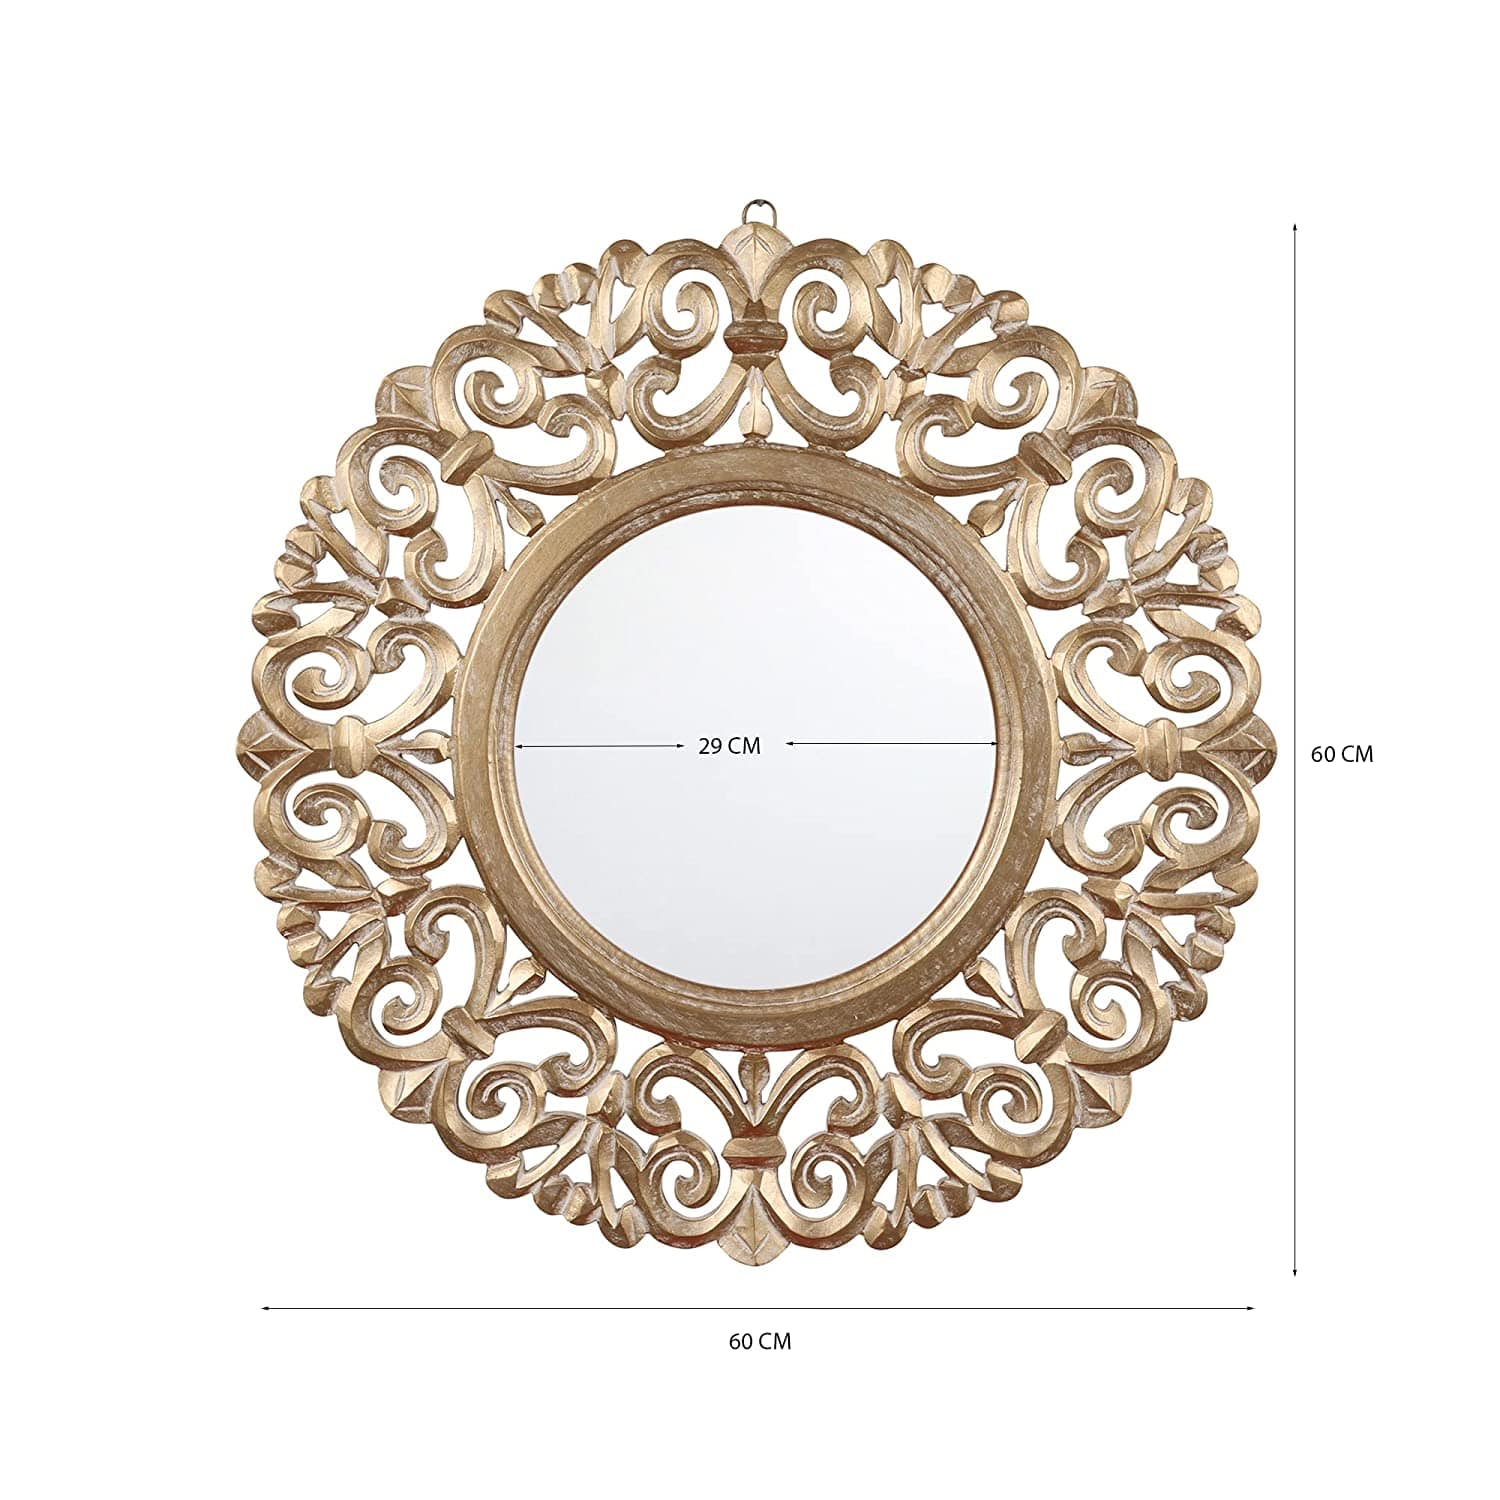 Adan's Homes Decorative Wall Mirror for Bathroom, Living Room, Gold, AHMR69, 60 cm x 60 cm x 2 cm